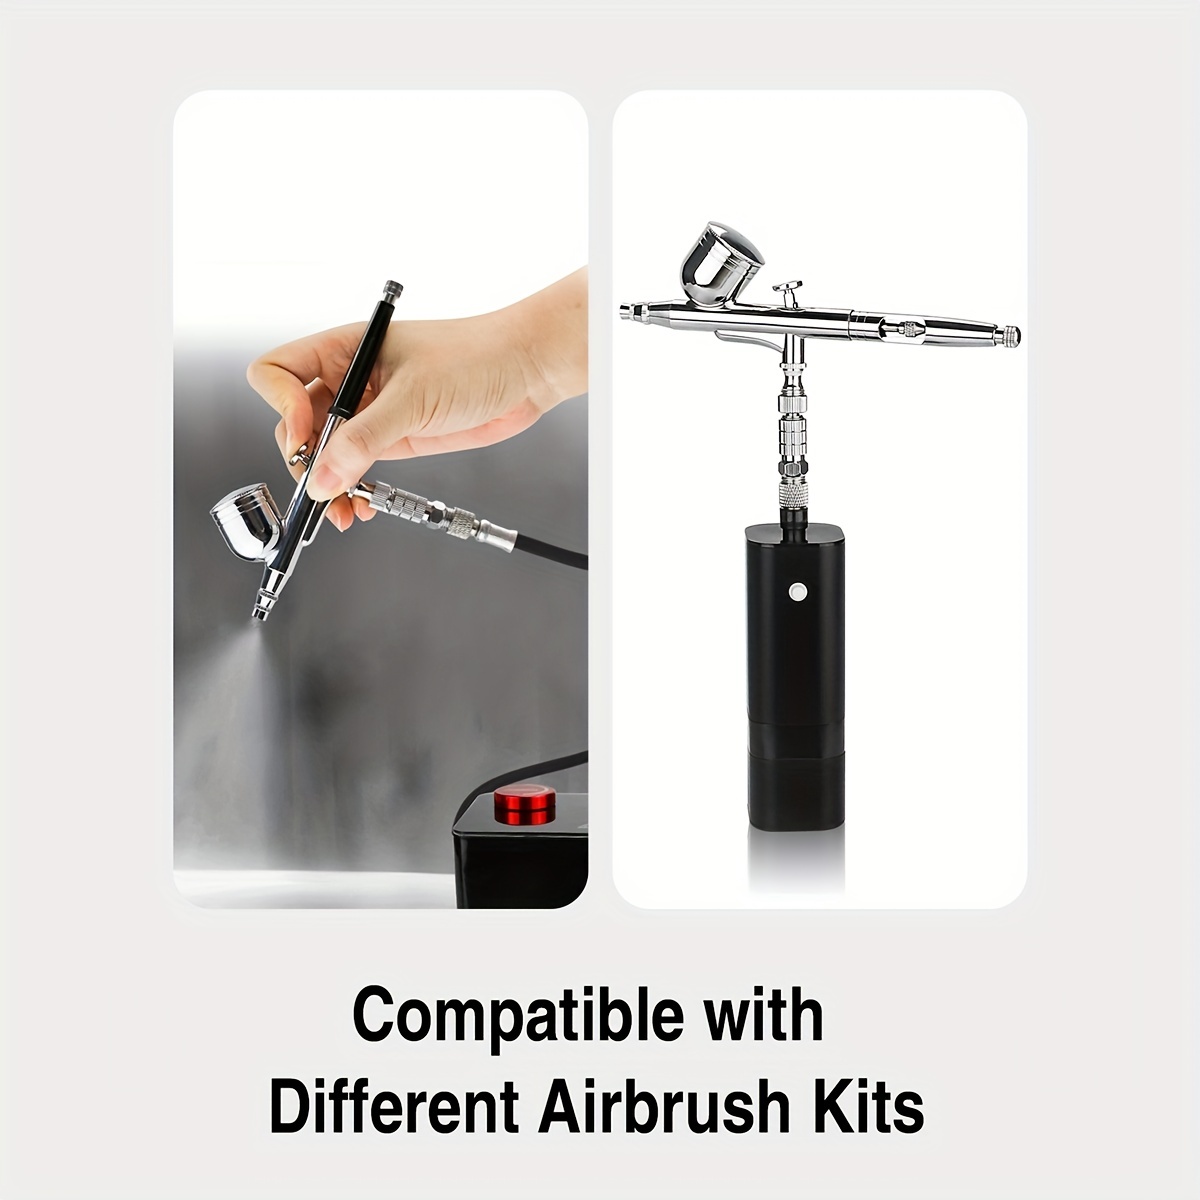 Airbrush Connector, Airbrush Air Hose Adaptors, Airbrush Kit